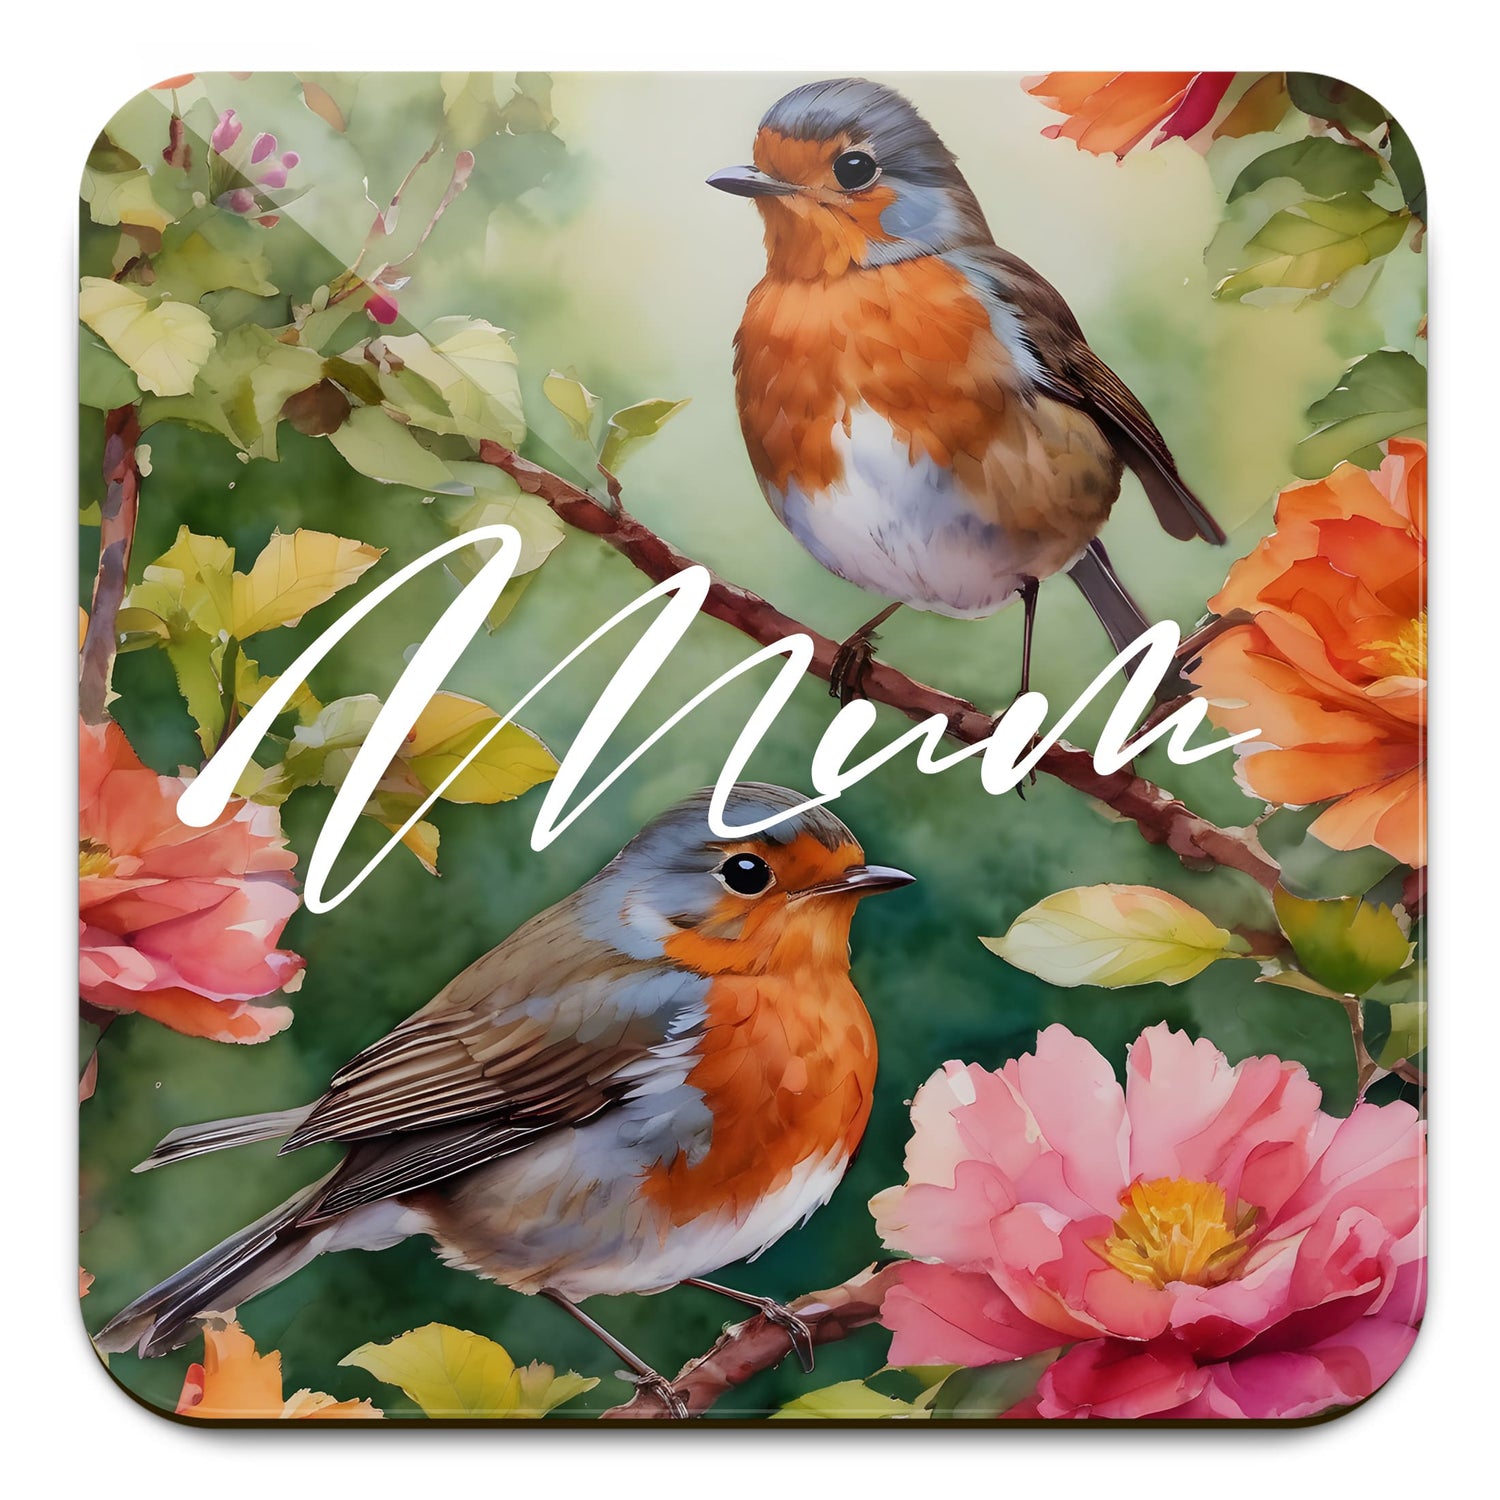 Personalised Bird Art Coaster Gift Robins Coaster